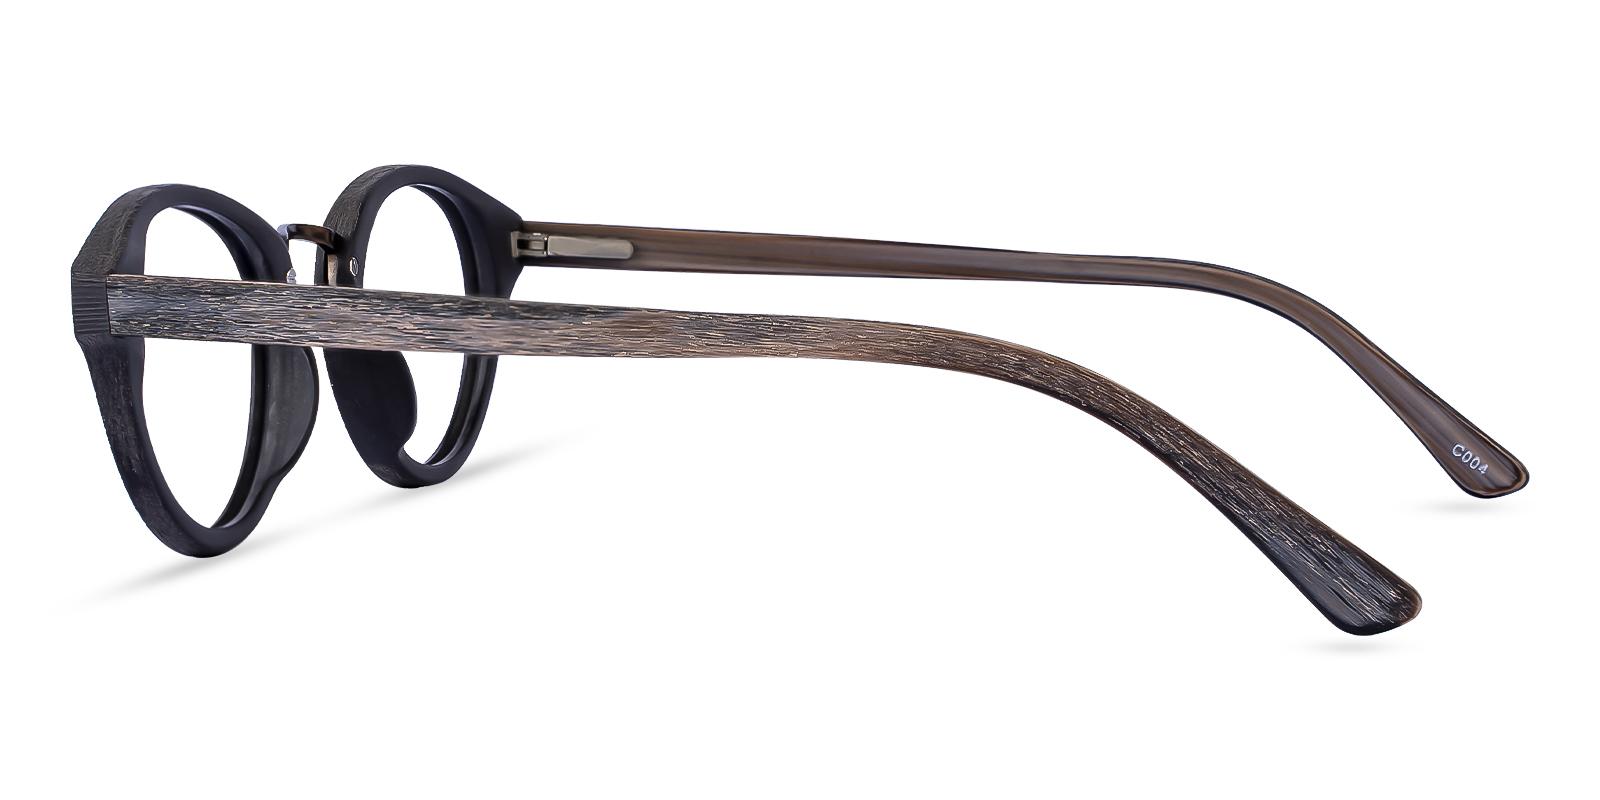 New Haven Brown Acetate Eyeglasses , SpringHinges , UniversalBridgeFit Frames from ABBE Glasses